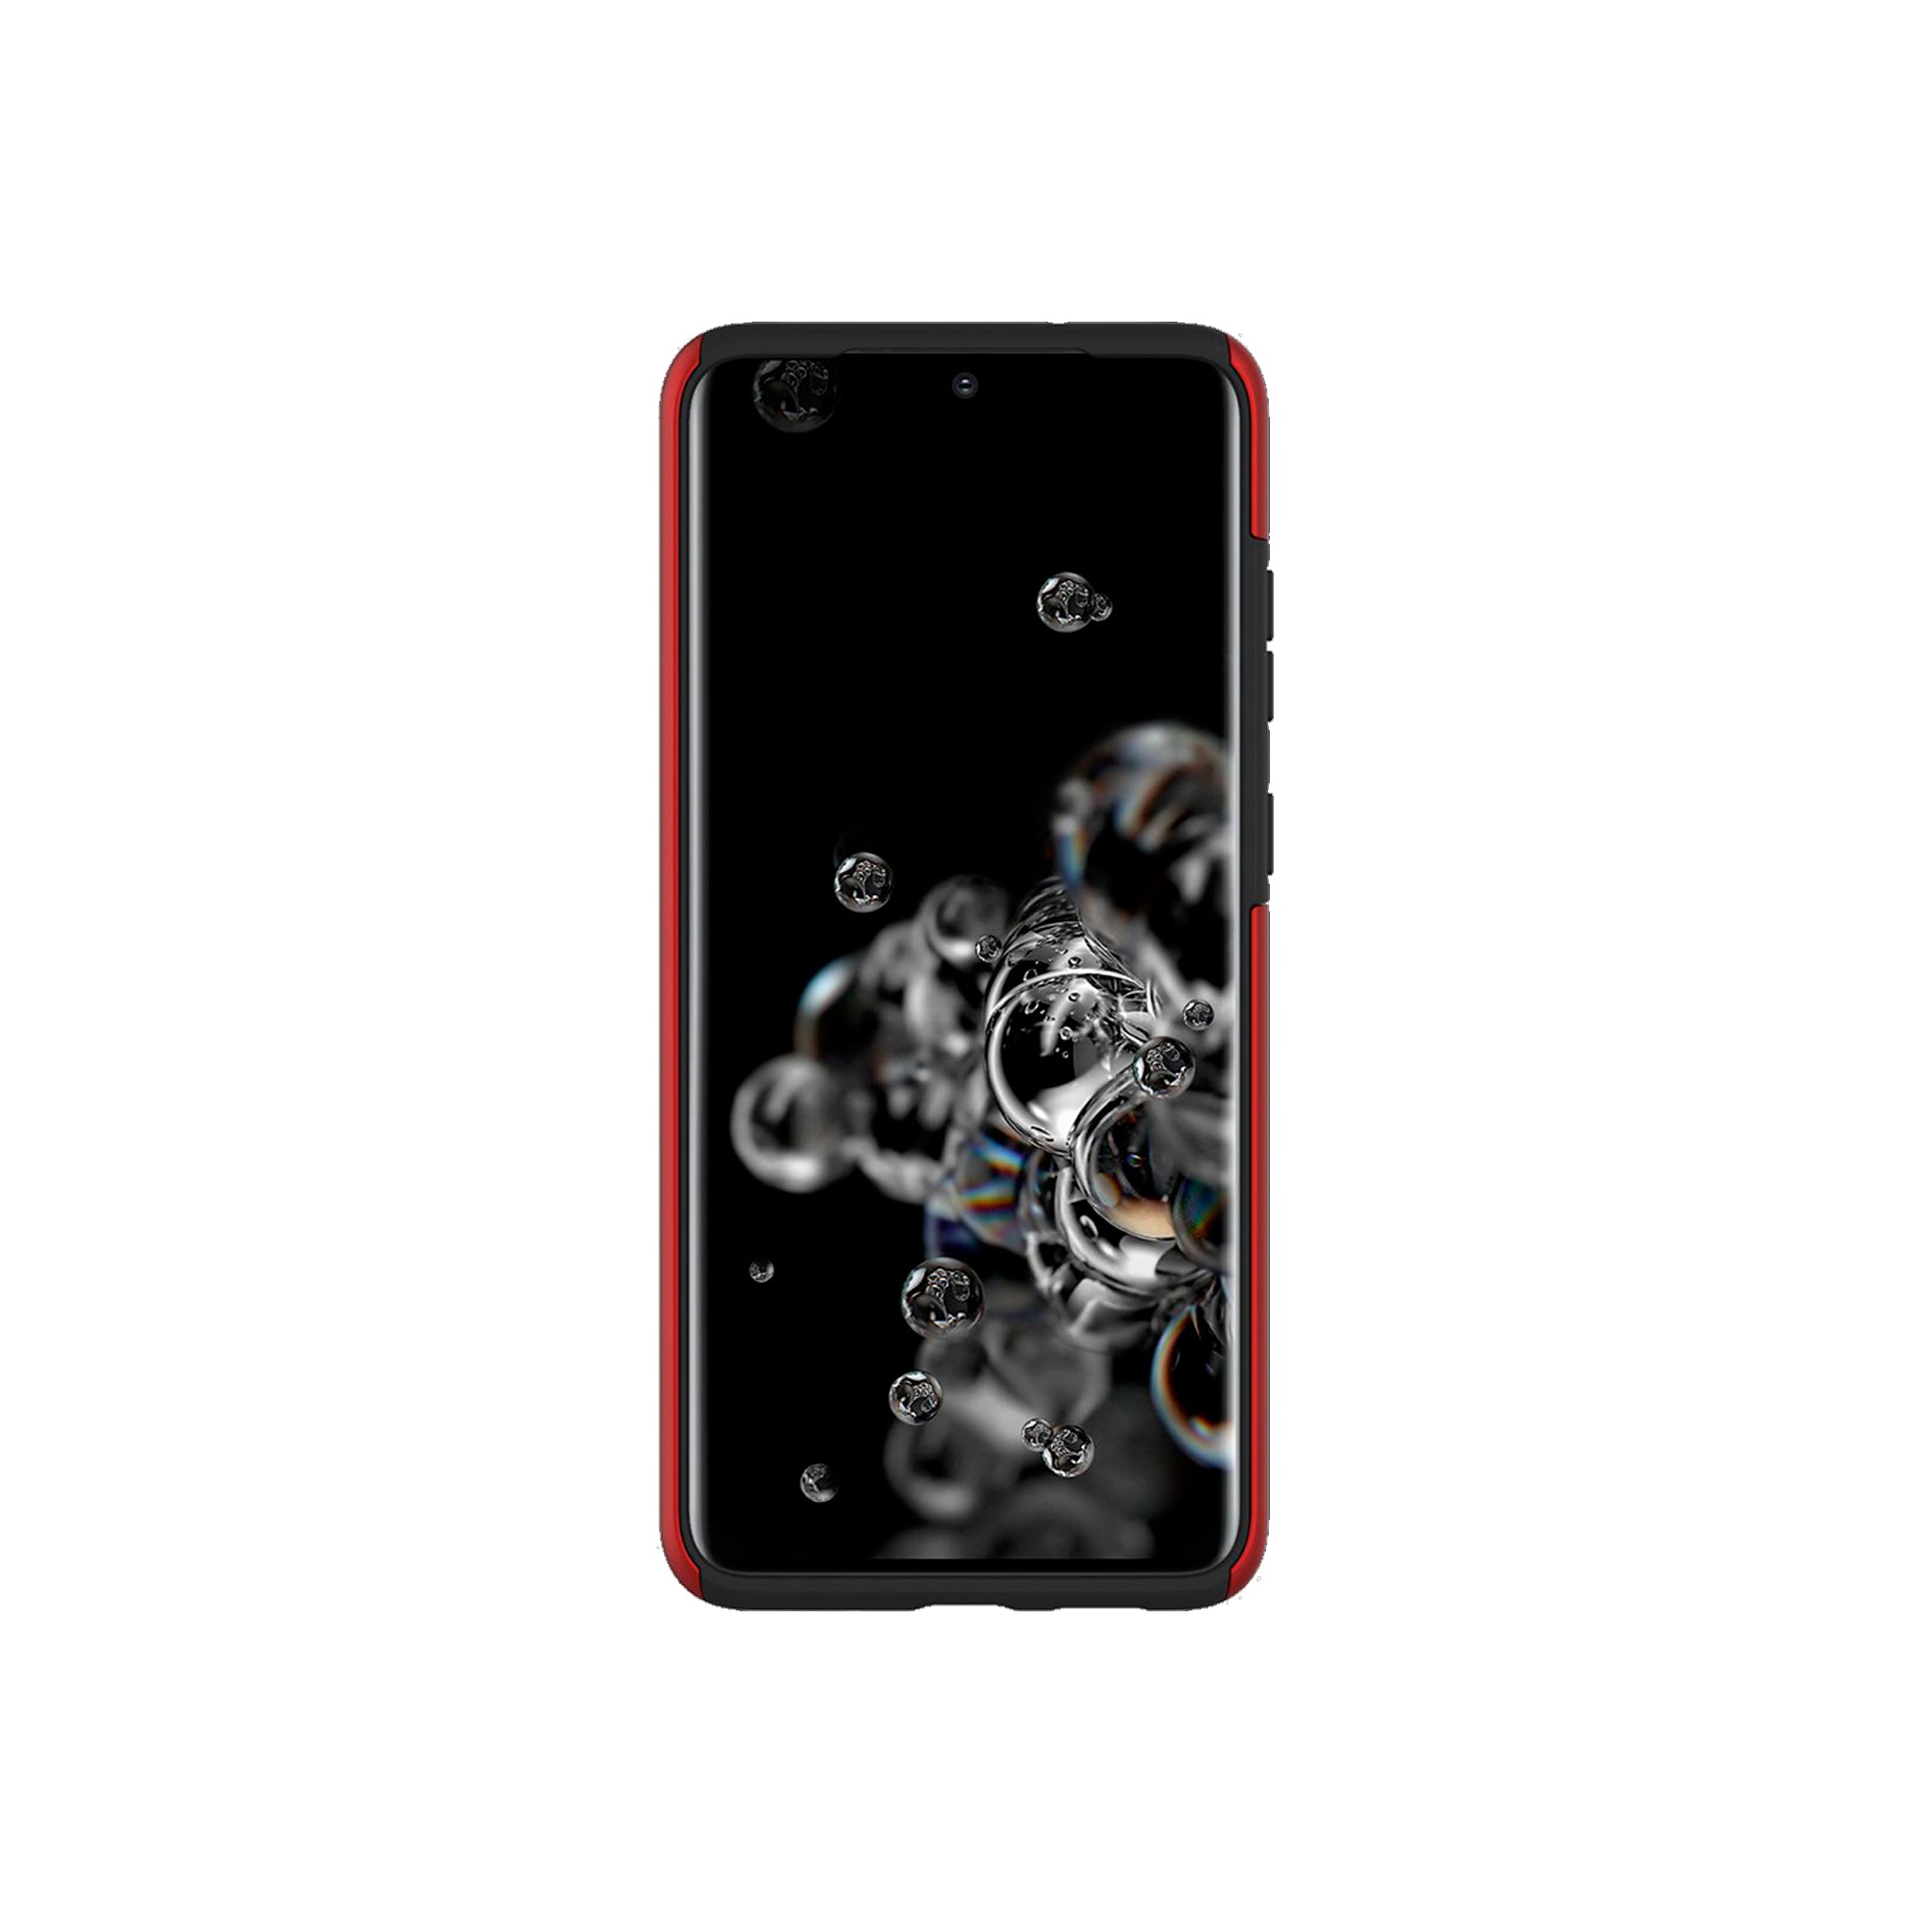 Incipio - DualPro Case For Samsung Galaxy S20 Plus - Iridescent Red And Black